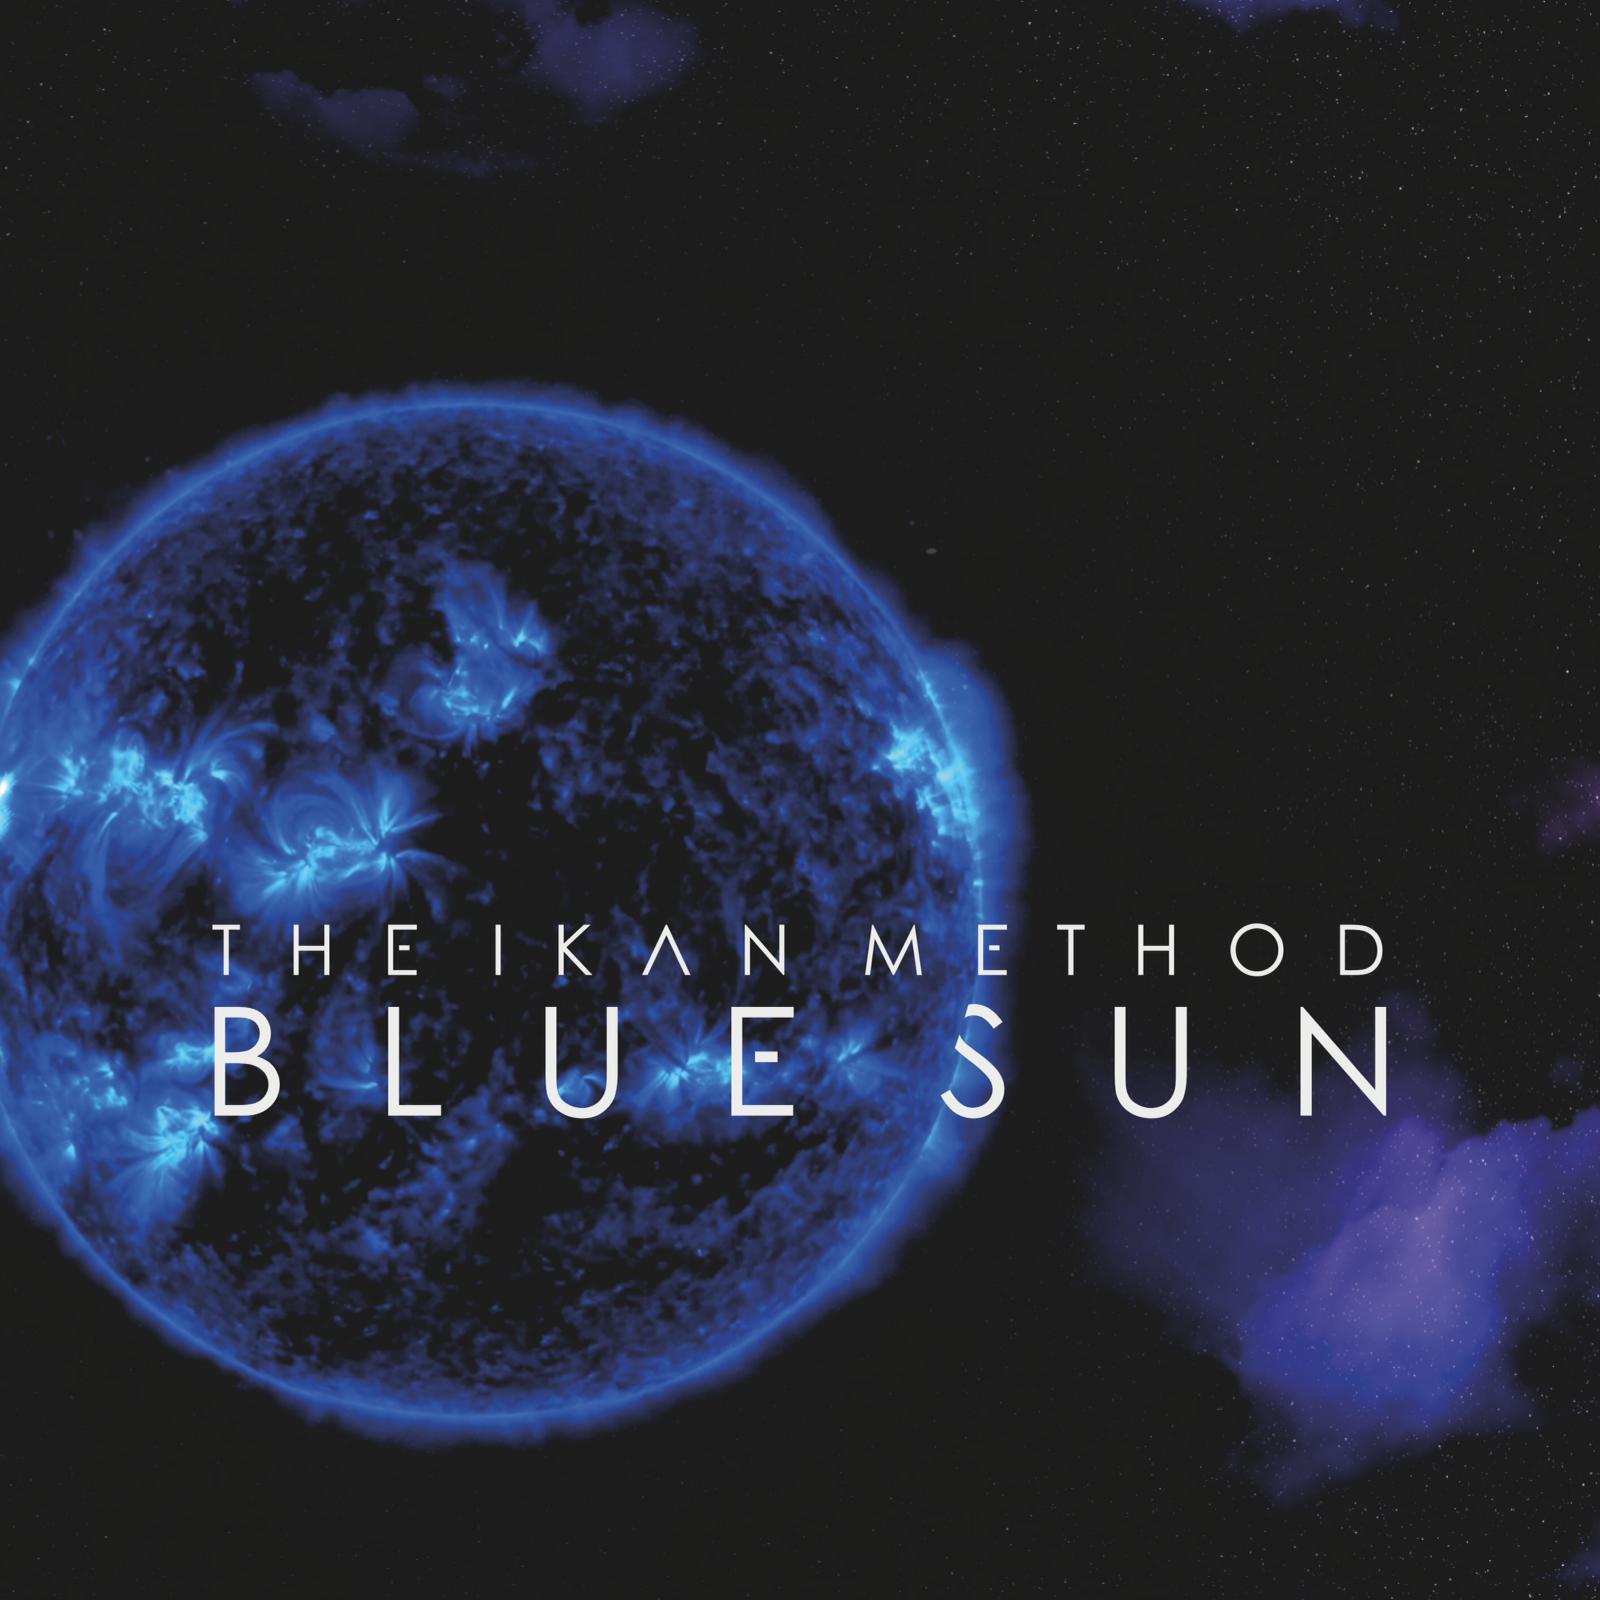 THE IKAN METHOD - "Blue Sun" Cd